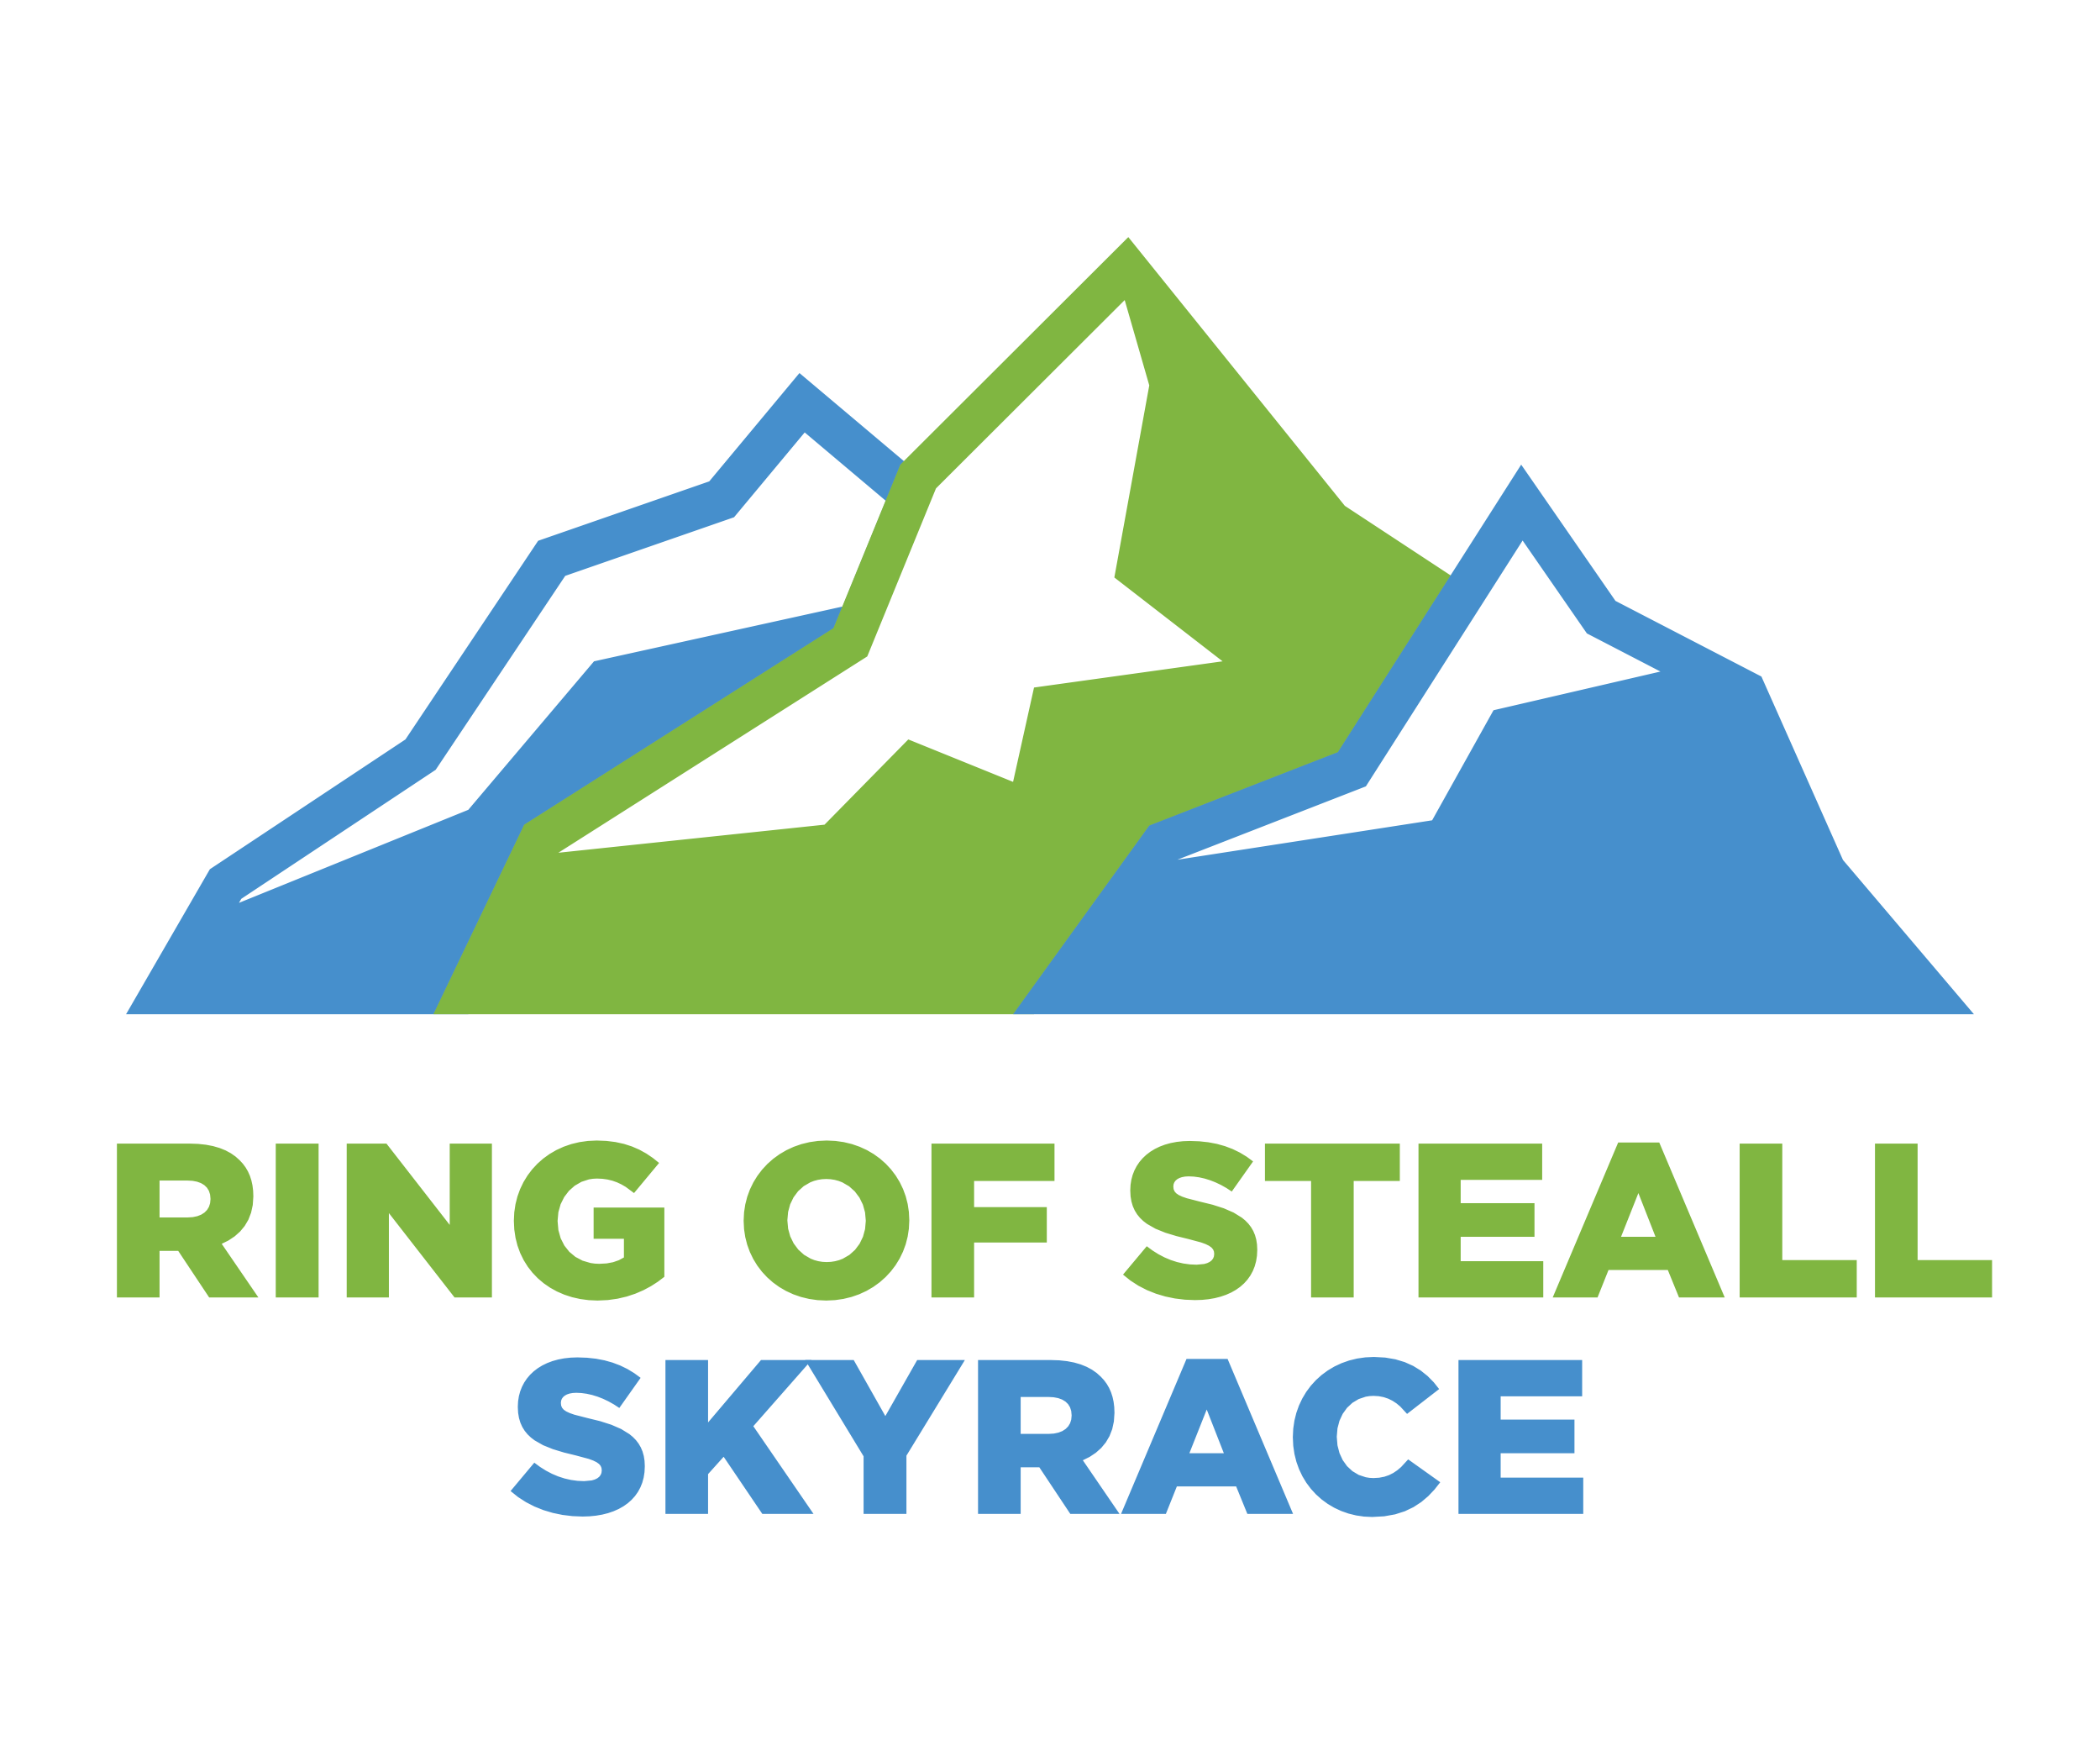 Salomon Ring of Steall Skyrace 2023